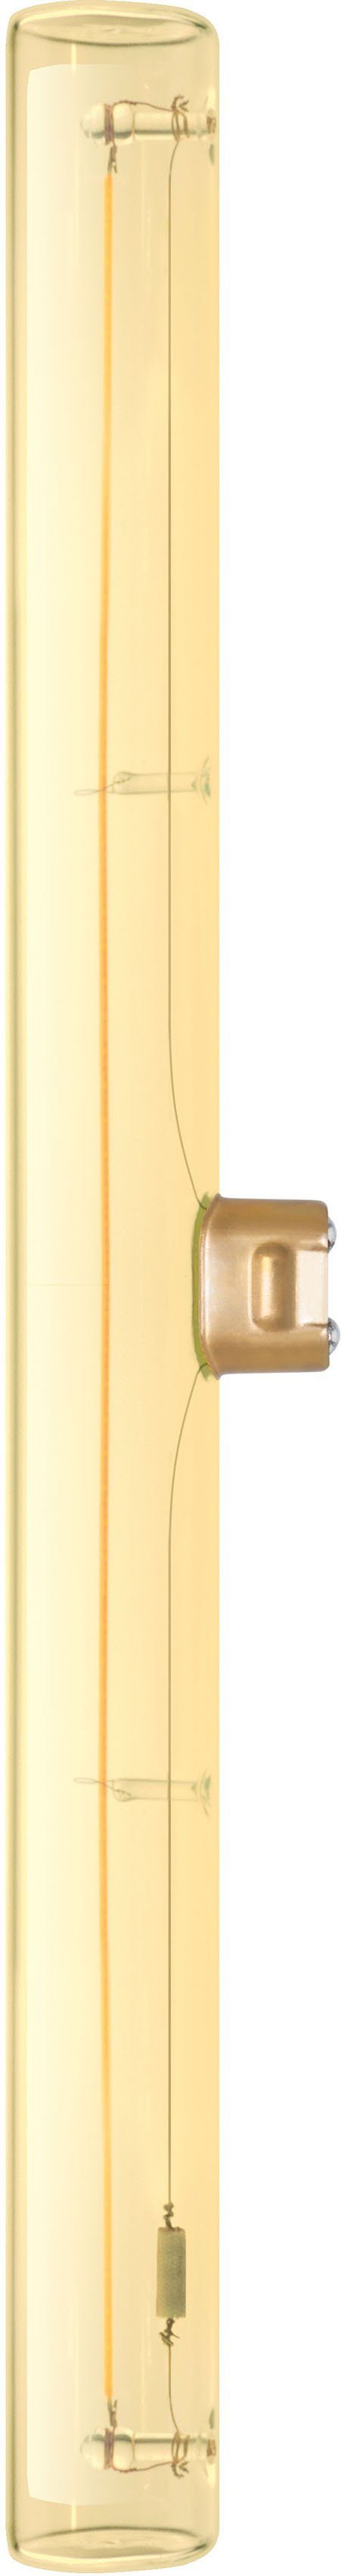 Linienlampe LED S14d, 300mm dimmbar, S14d, Warmweiß, Linienlampe LED-Leuchtmittel gold, 300mm gold SEGULA S14d